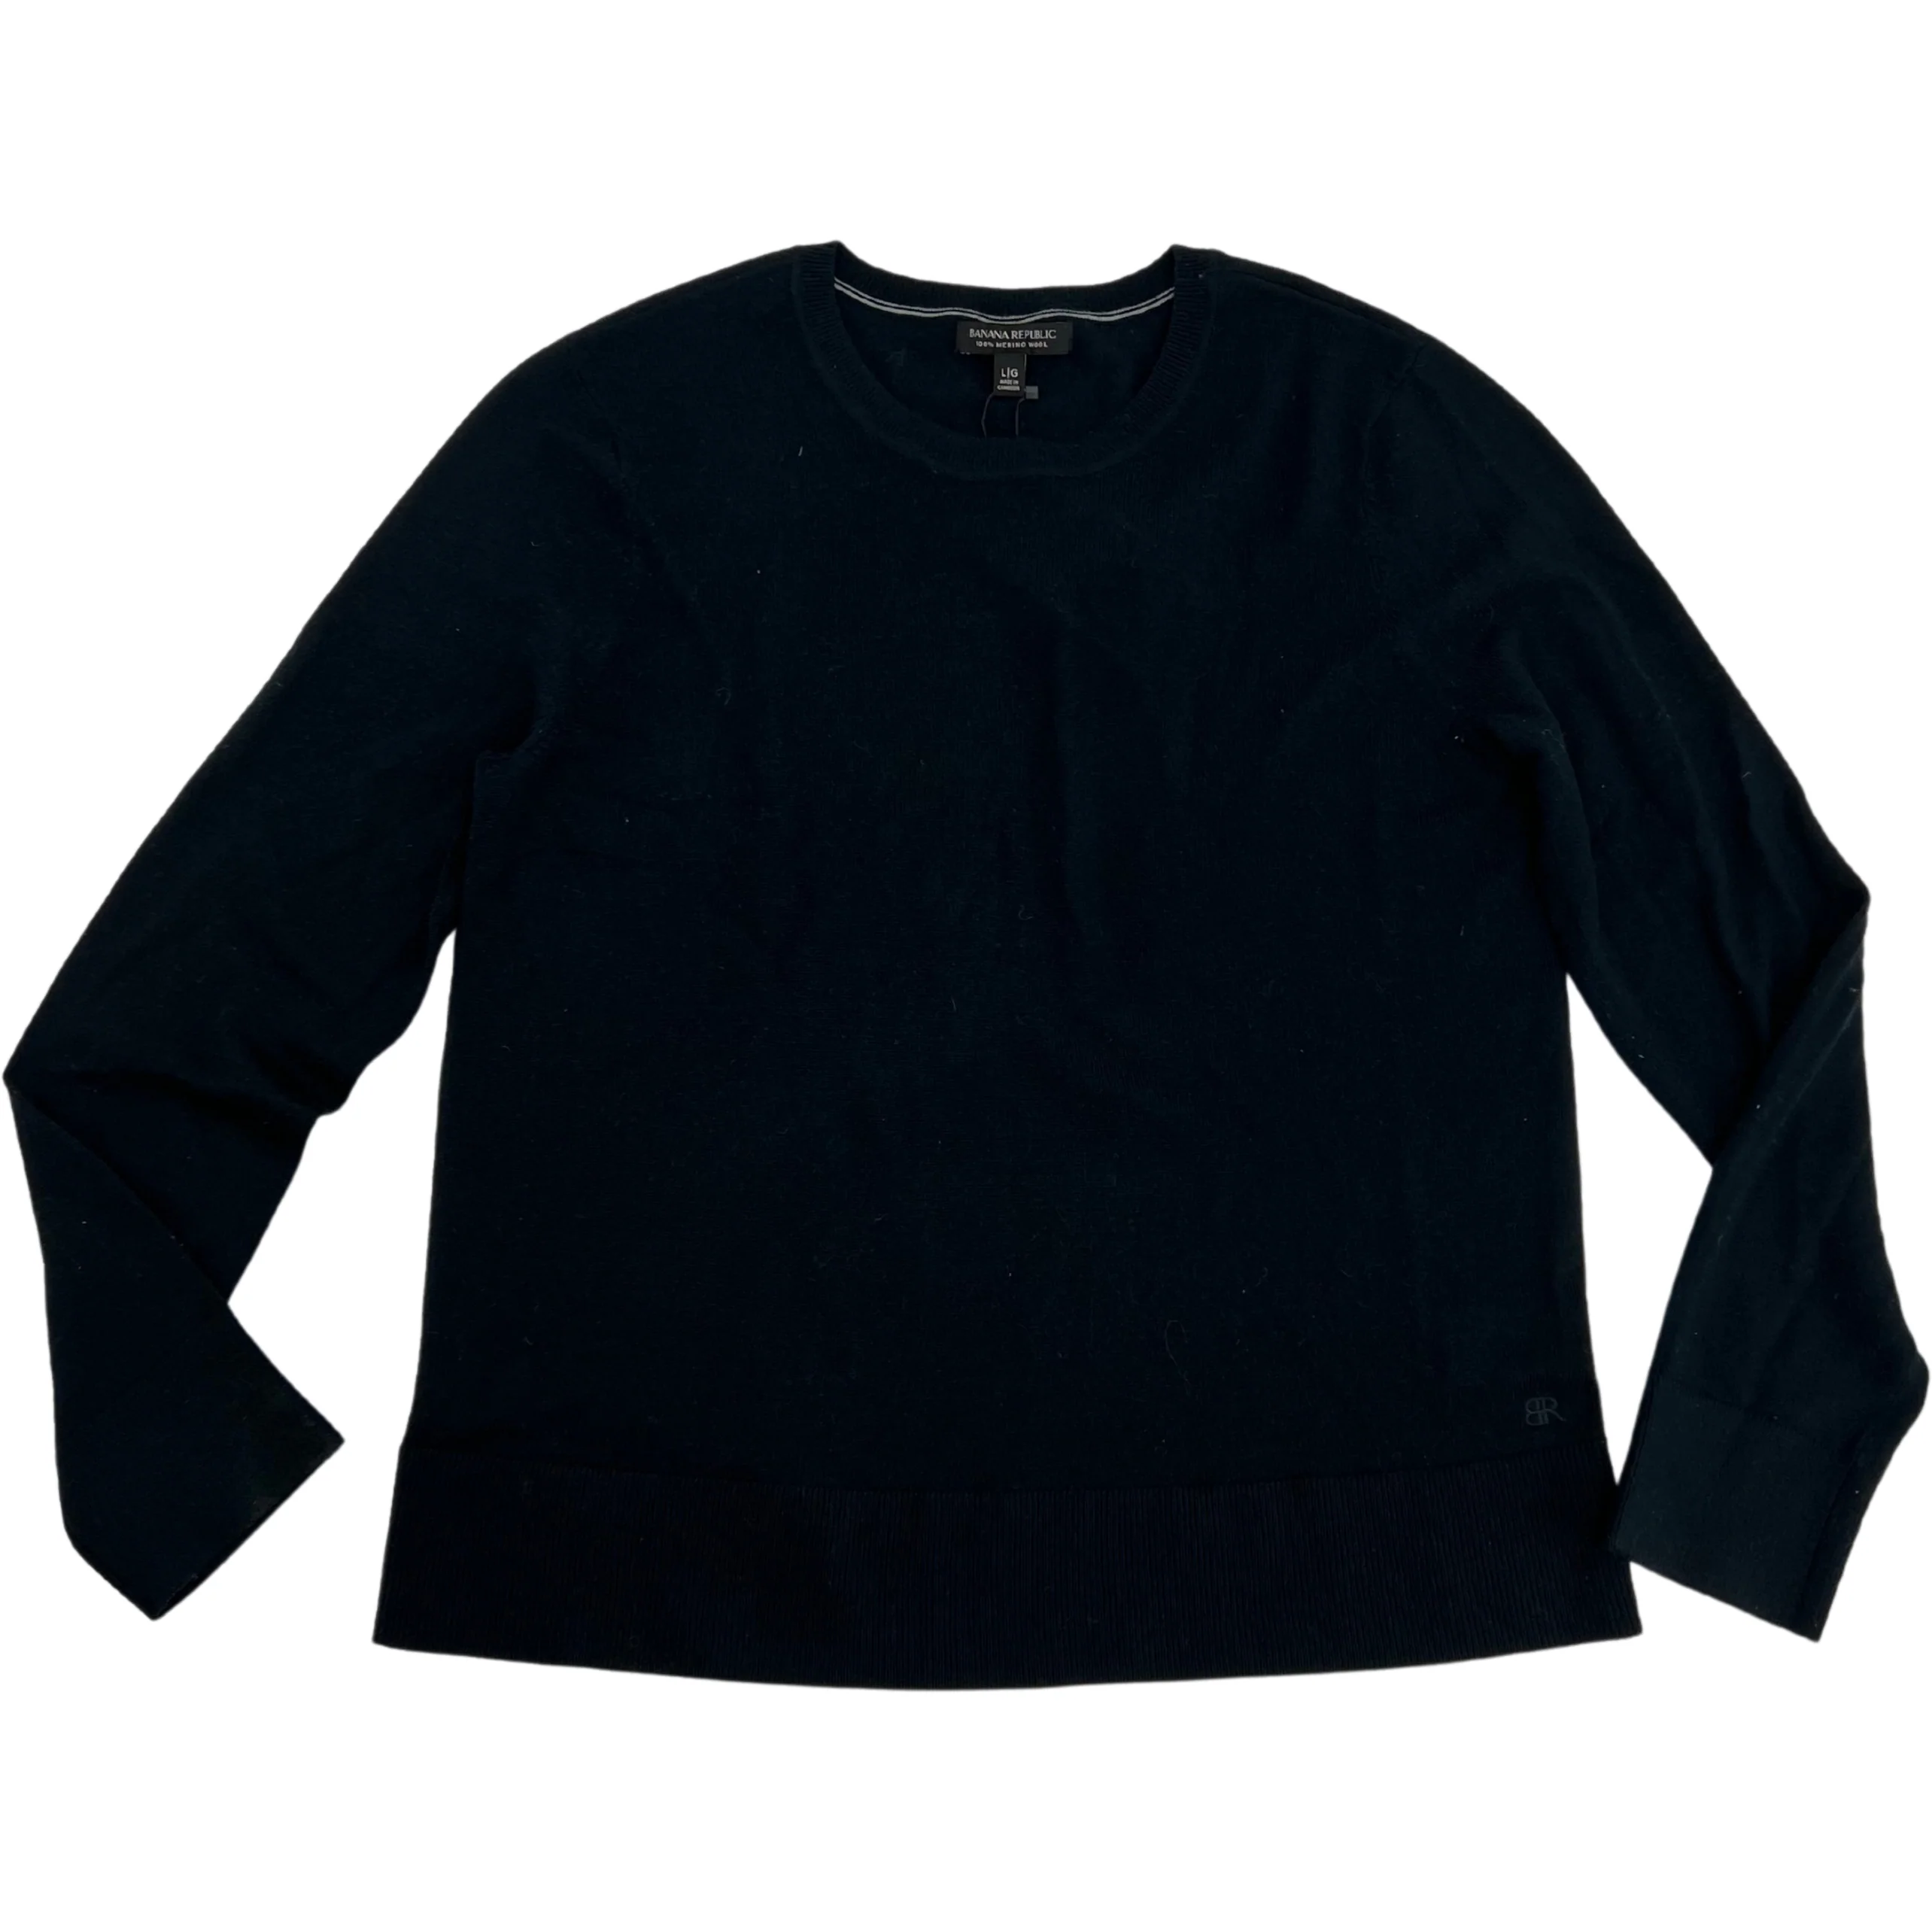 Banana Republic Women's Pullover Sweater: Black / Size Large